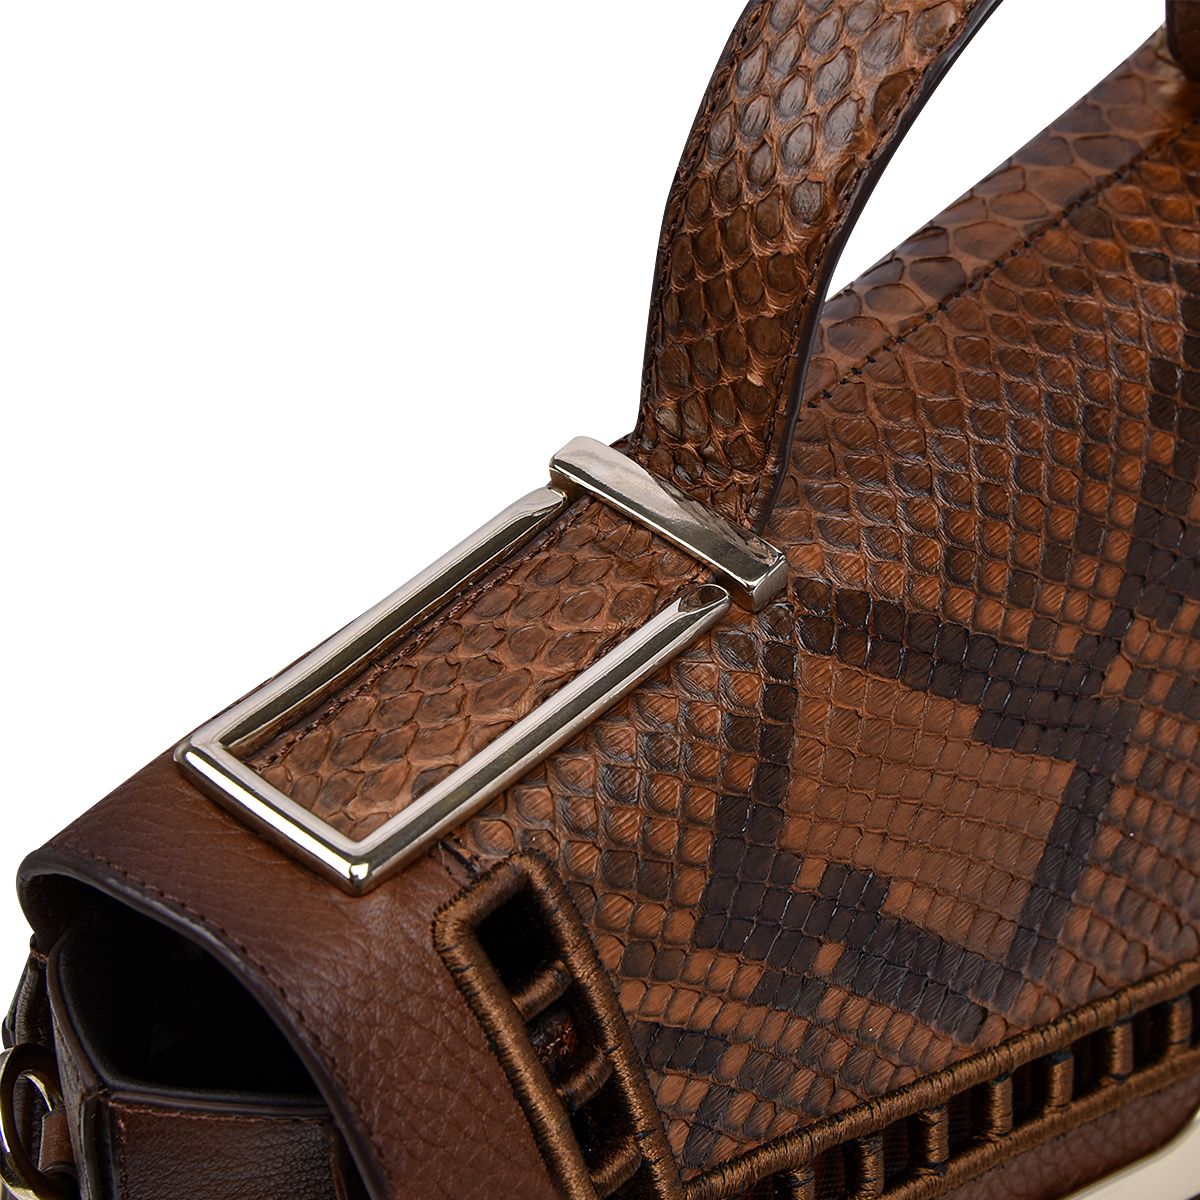 BOD26PI - Cuadra ocre casual fashion python handbag for women-Kuet.us